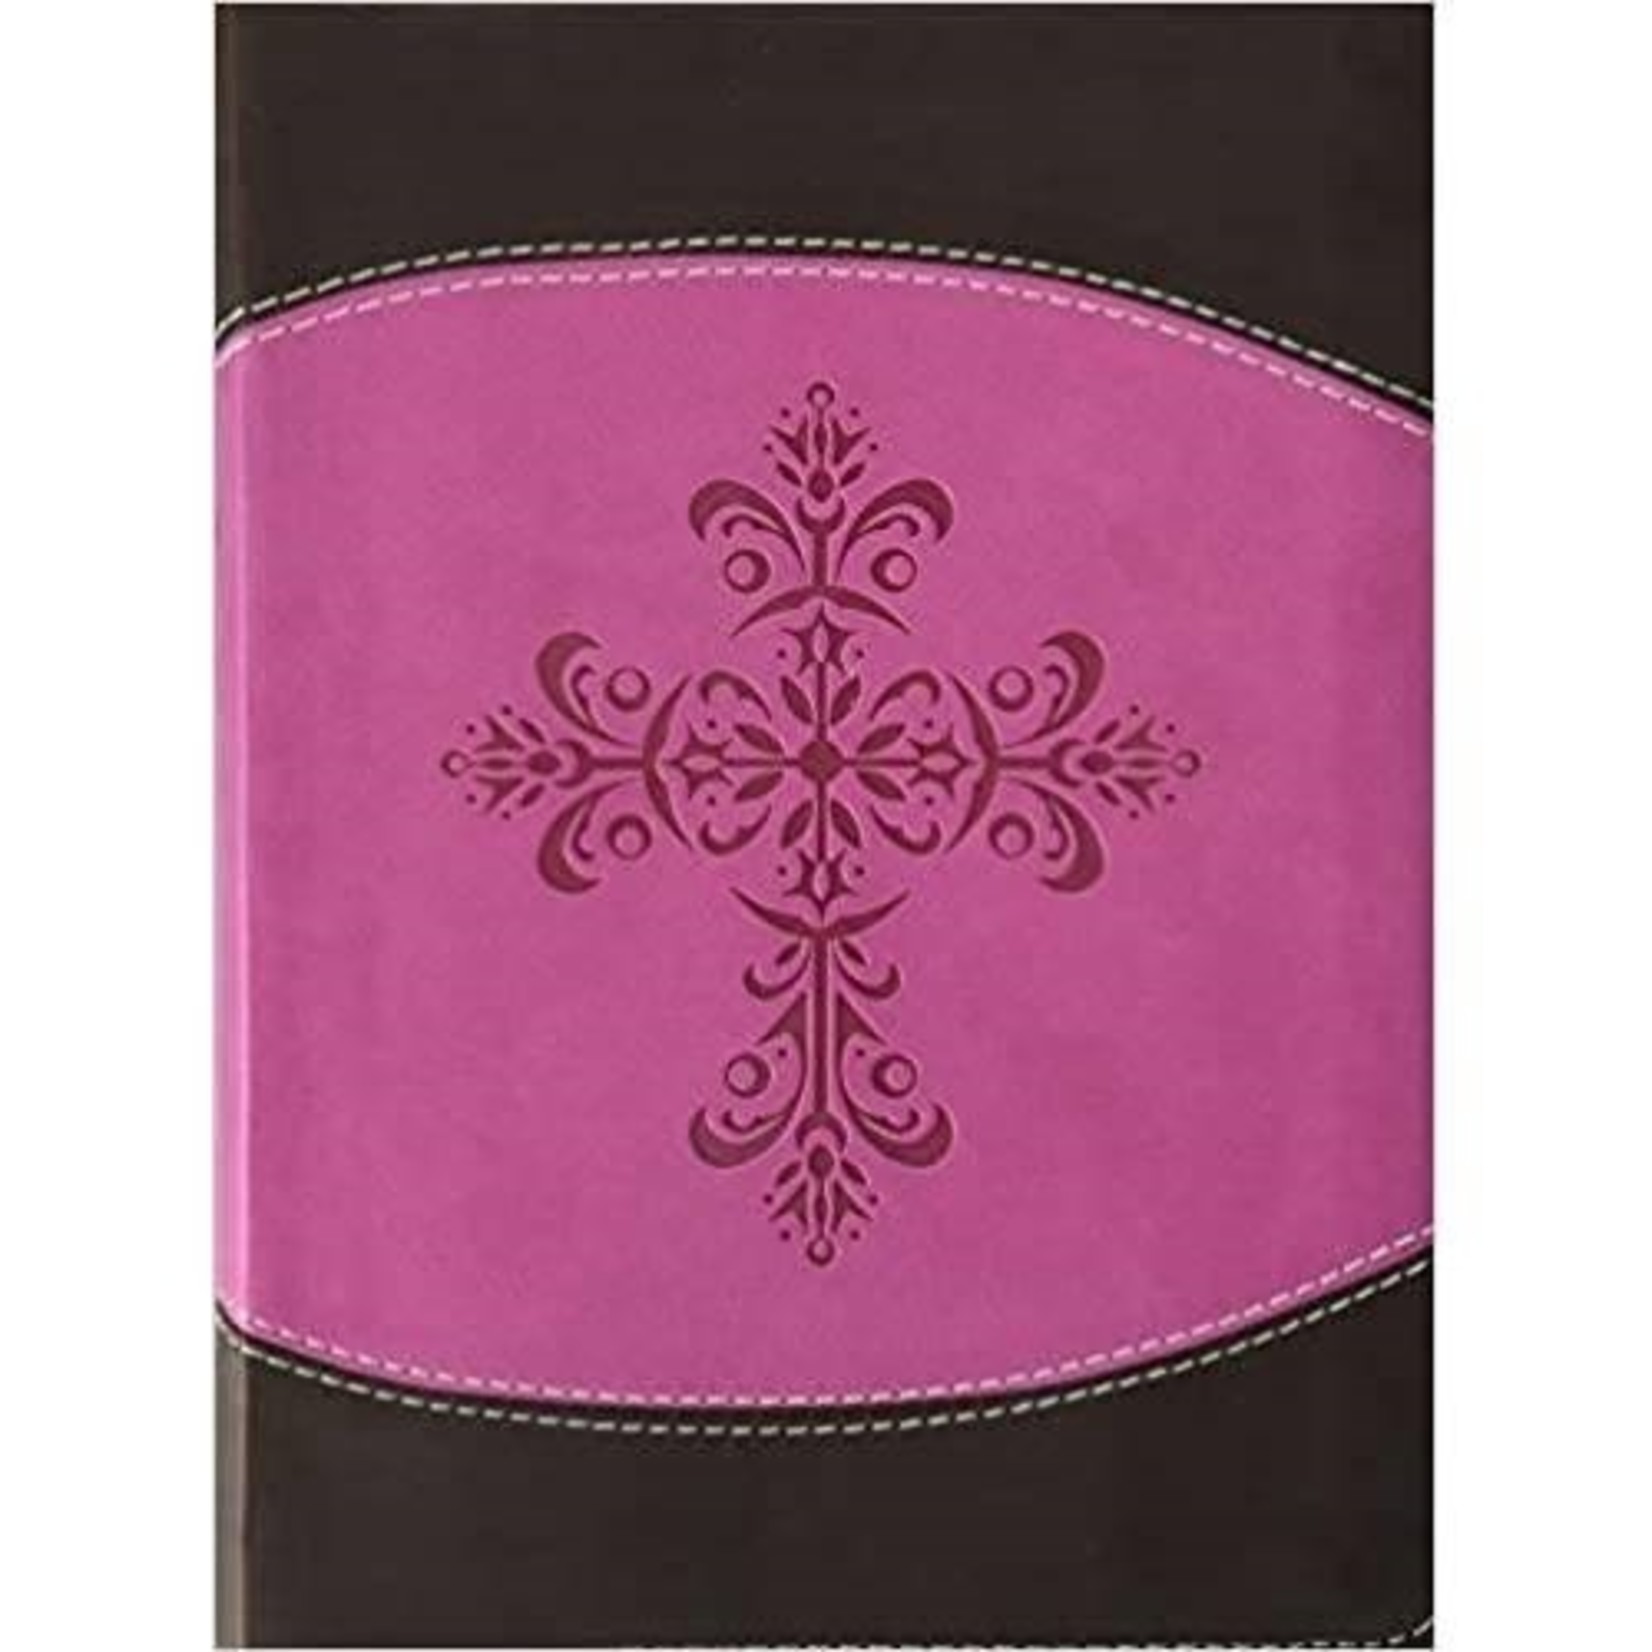 The Lutheran Study Bible (ESV) English Standard Version Compact Duotone Pink/Chocolate